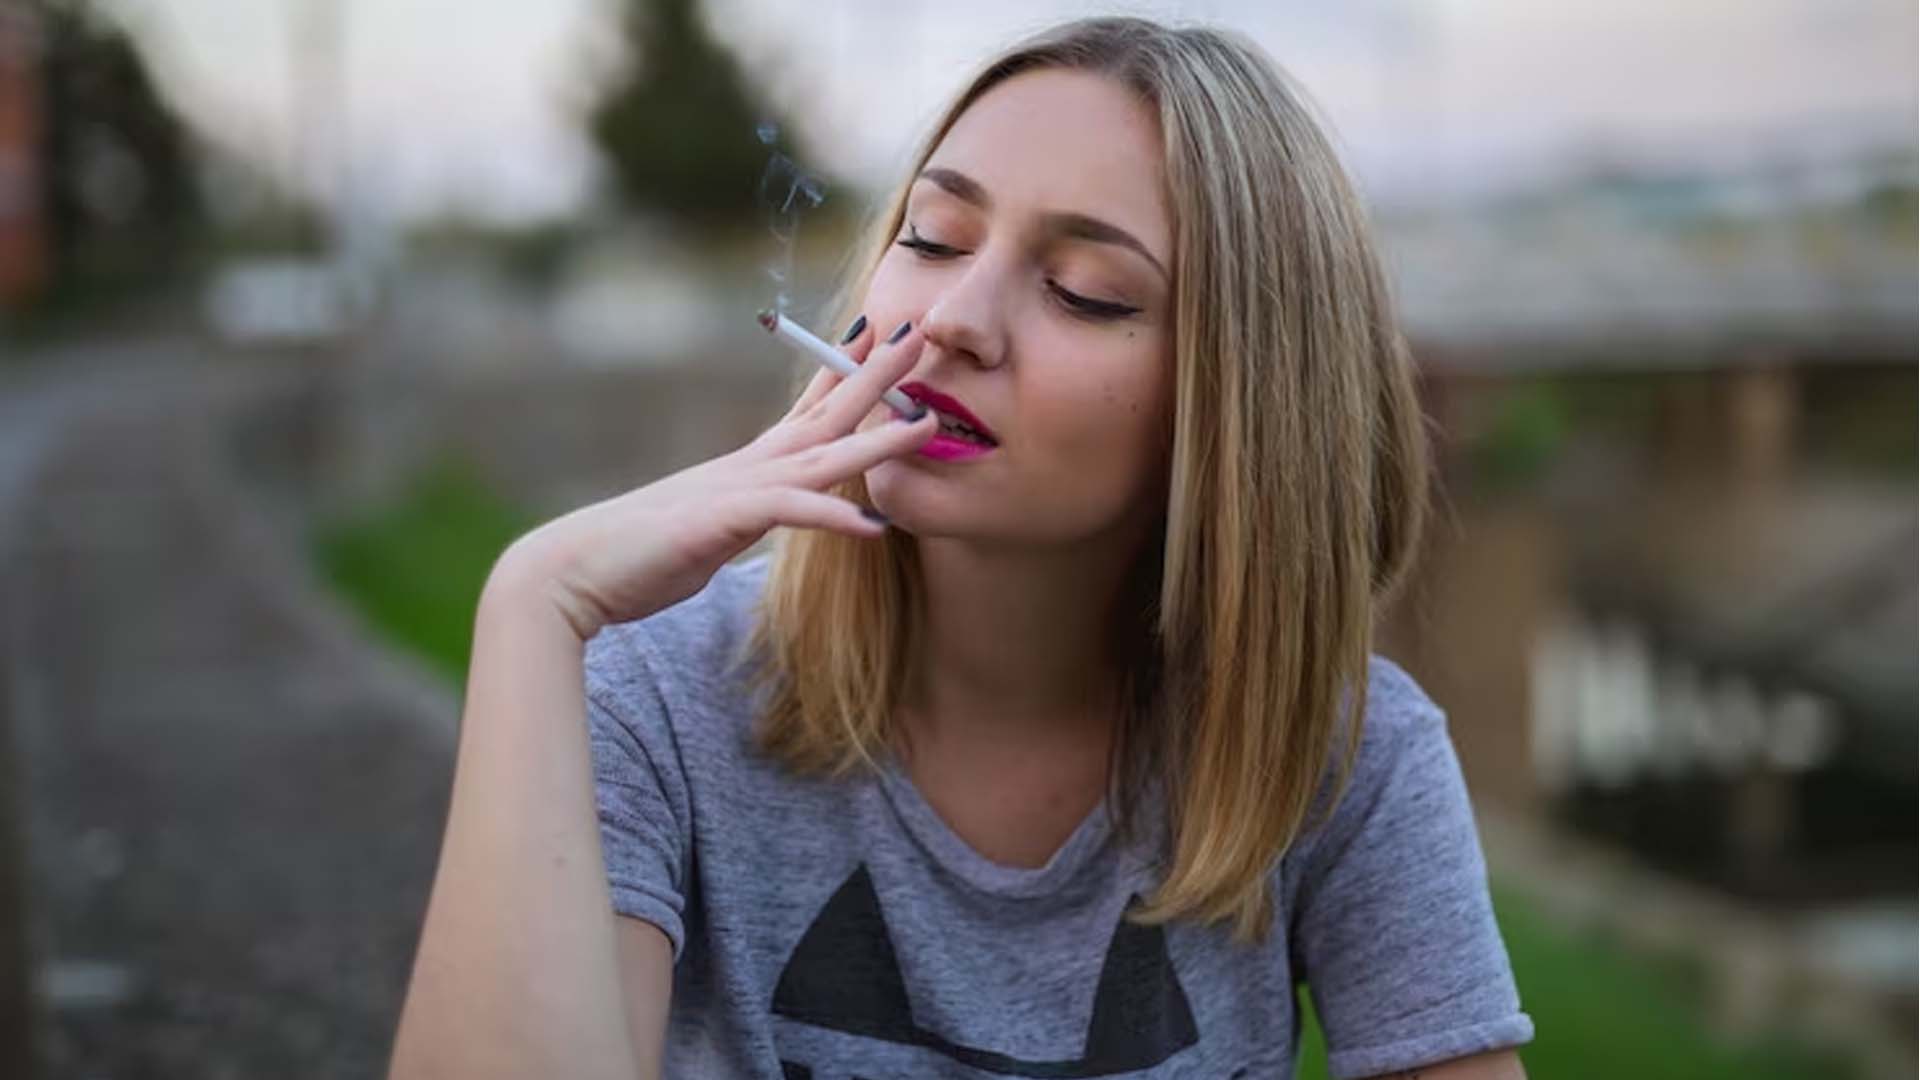 Does Smoking Cause Hair Loss?